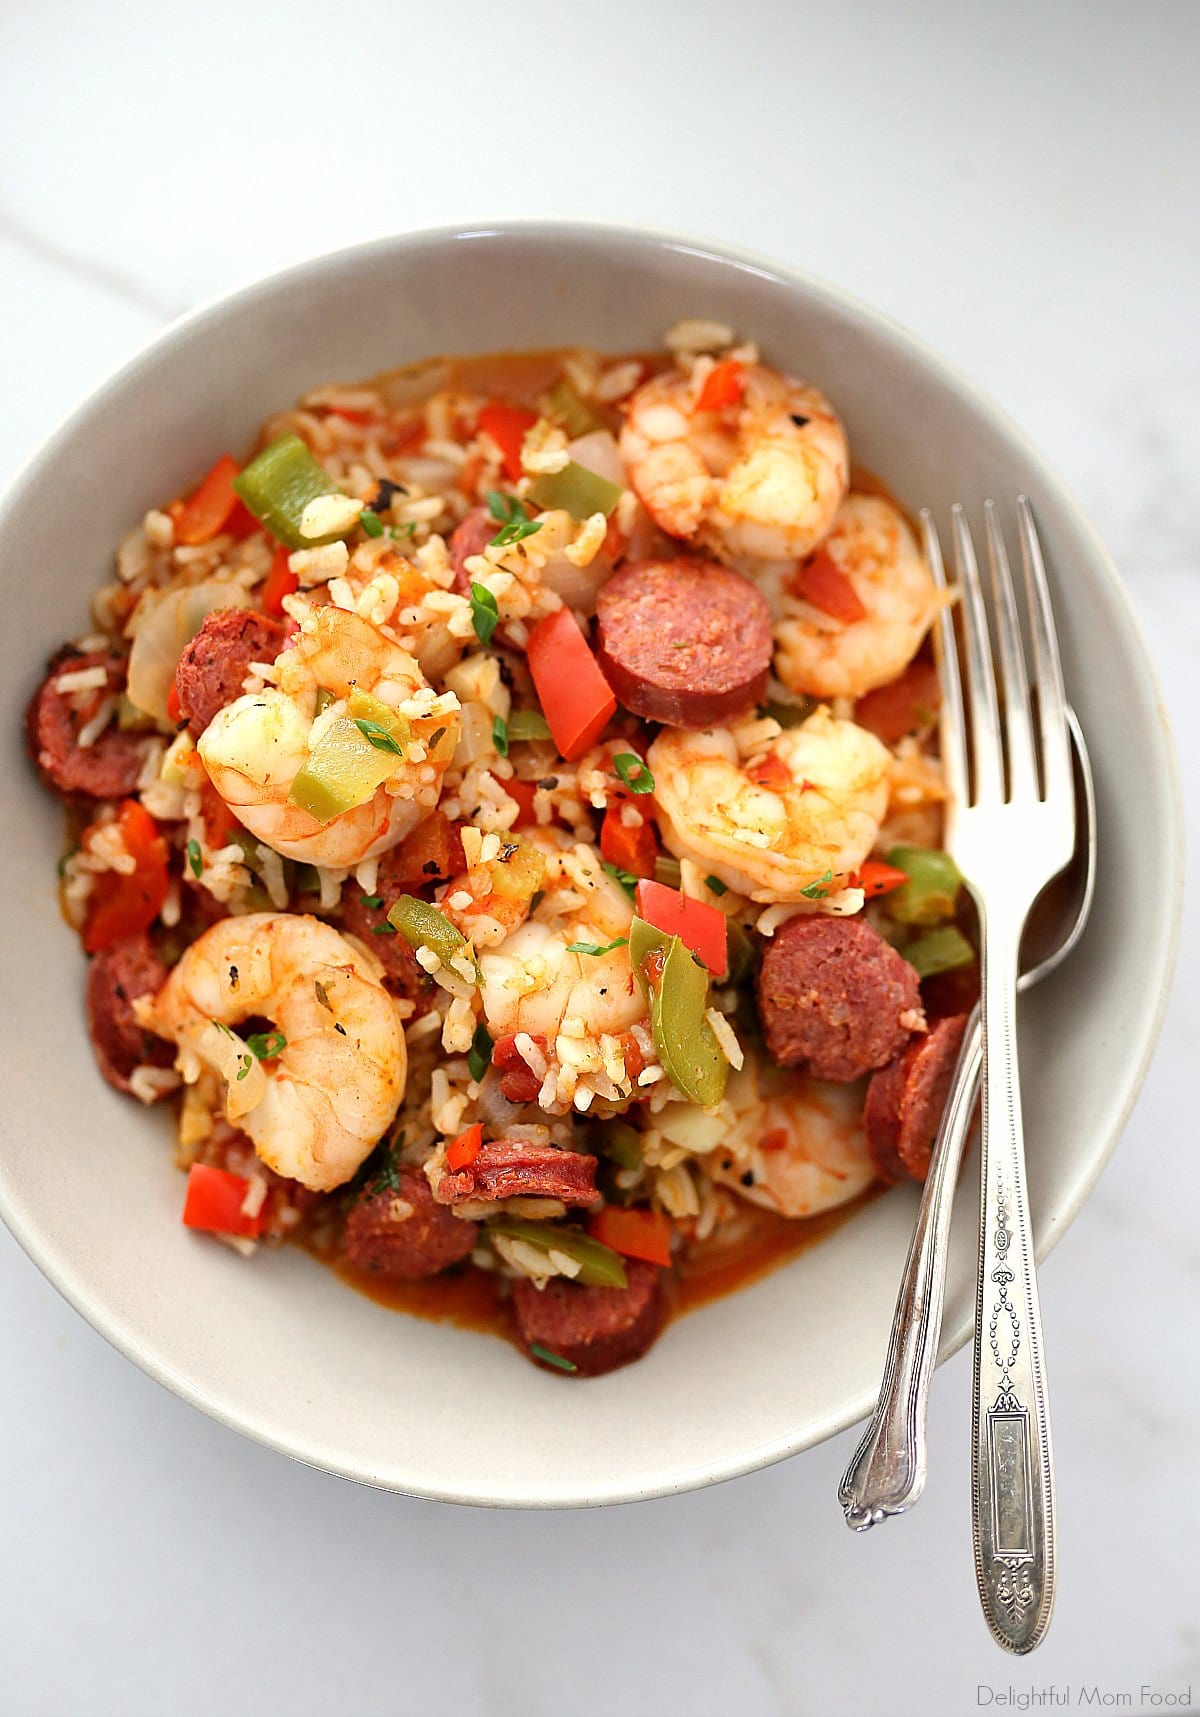 Healthy Jambalaya Recipe With Shrimp And Sausage - Delightful Mom Food